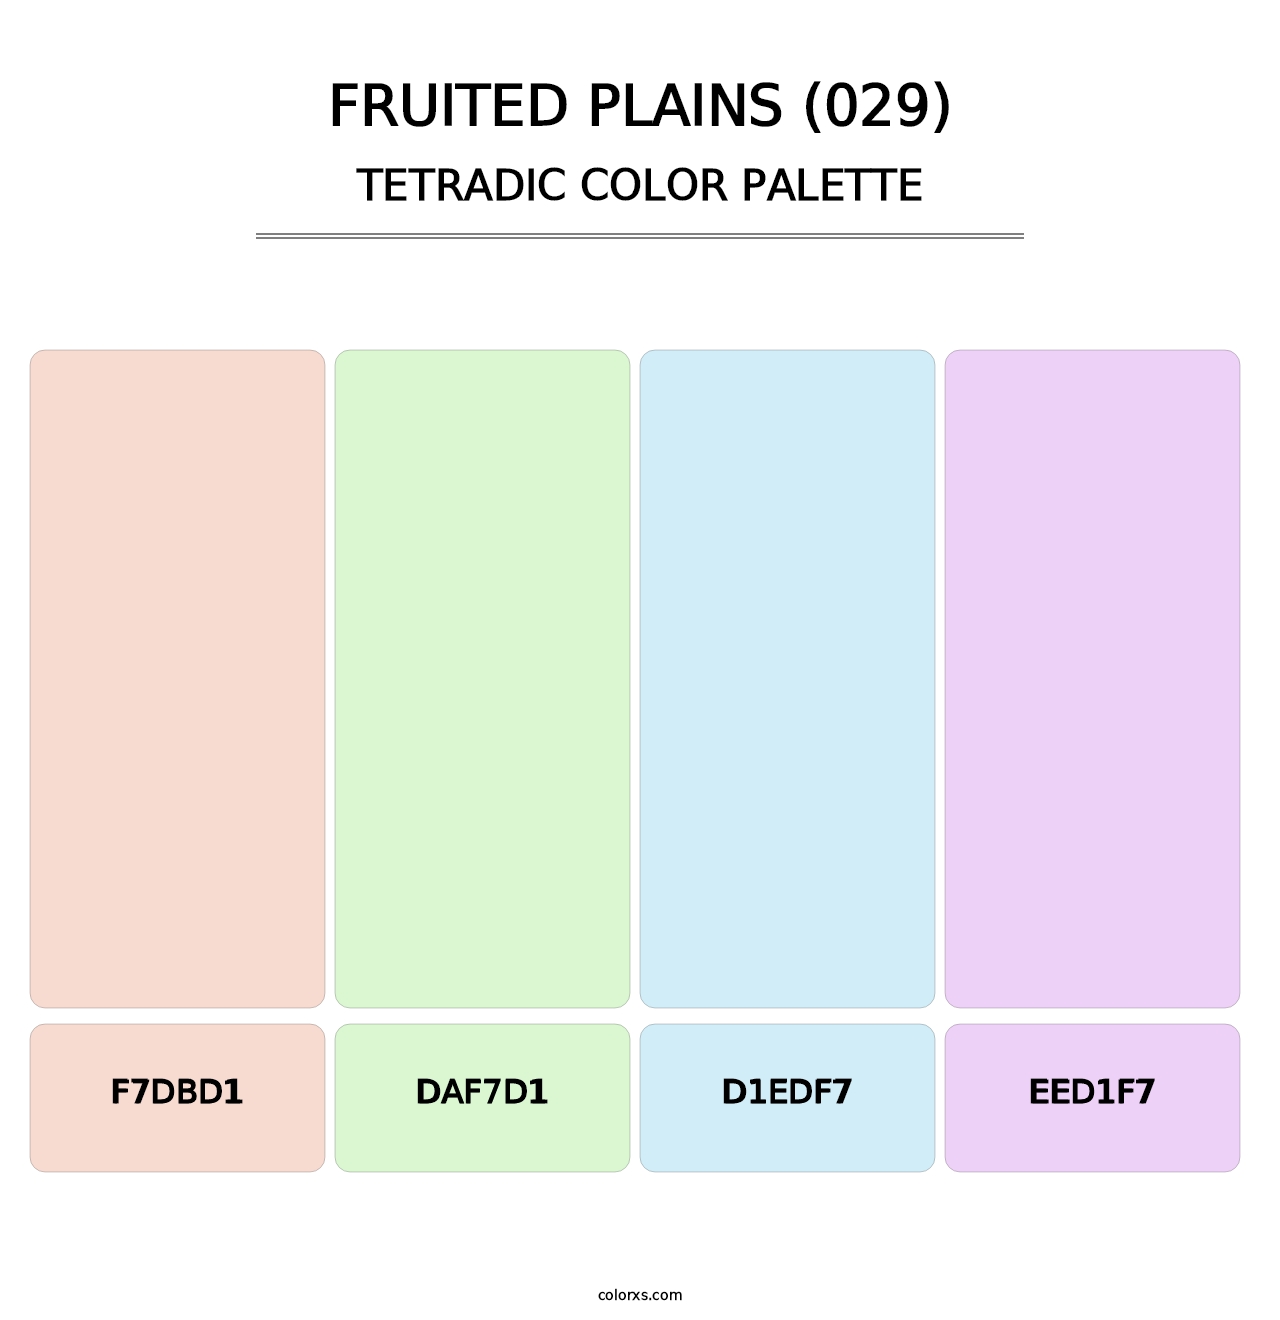 Fruited Plains (029) - Tetradic Color Palette